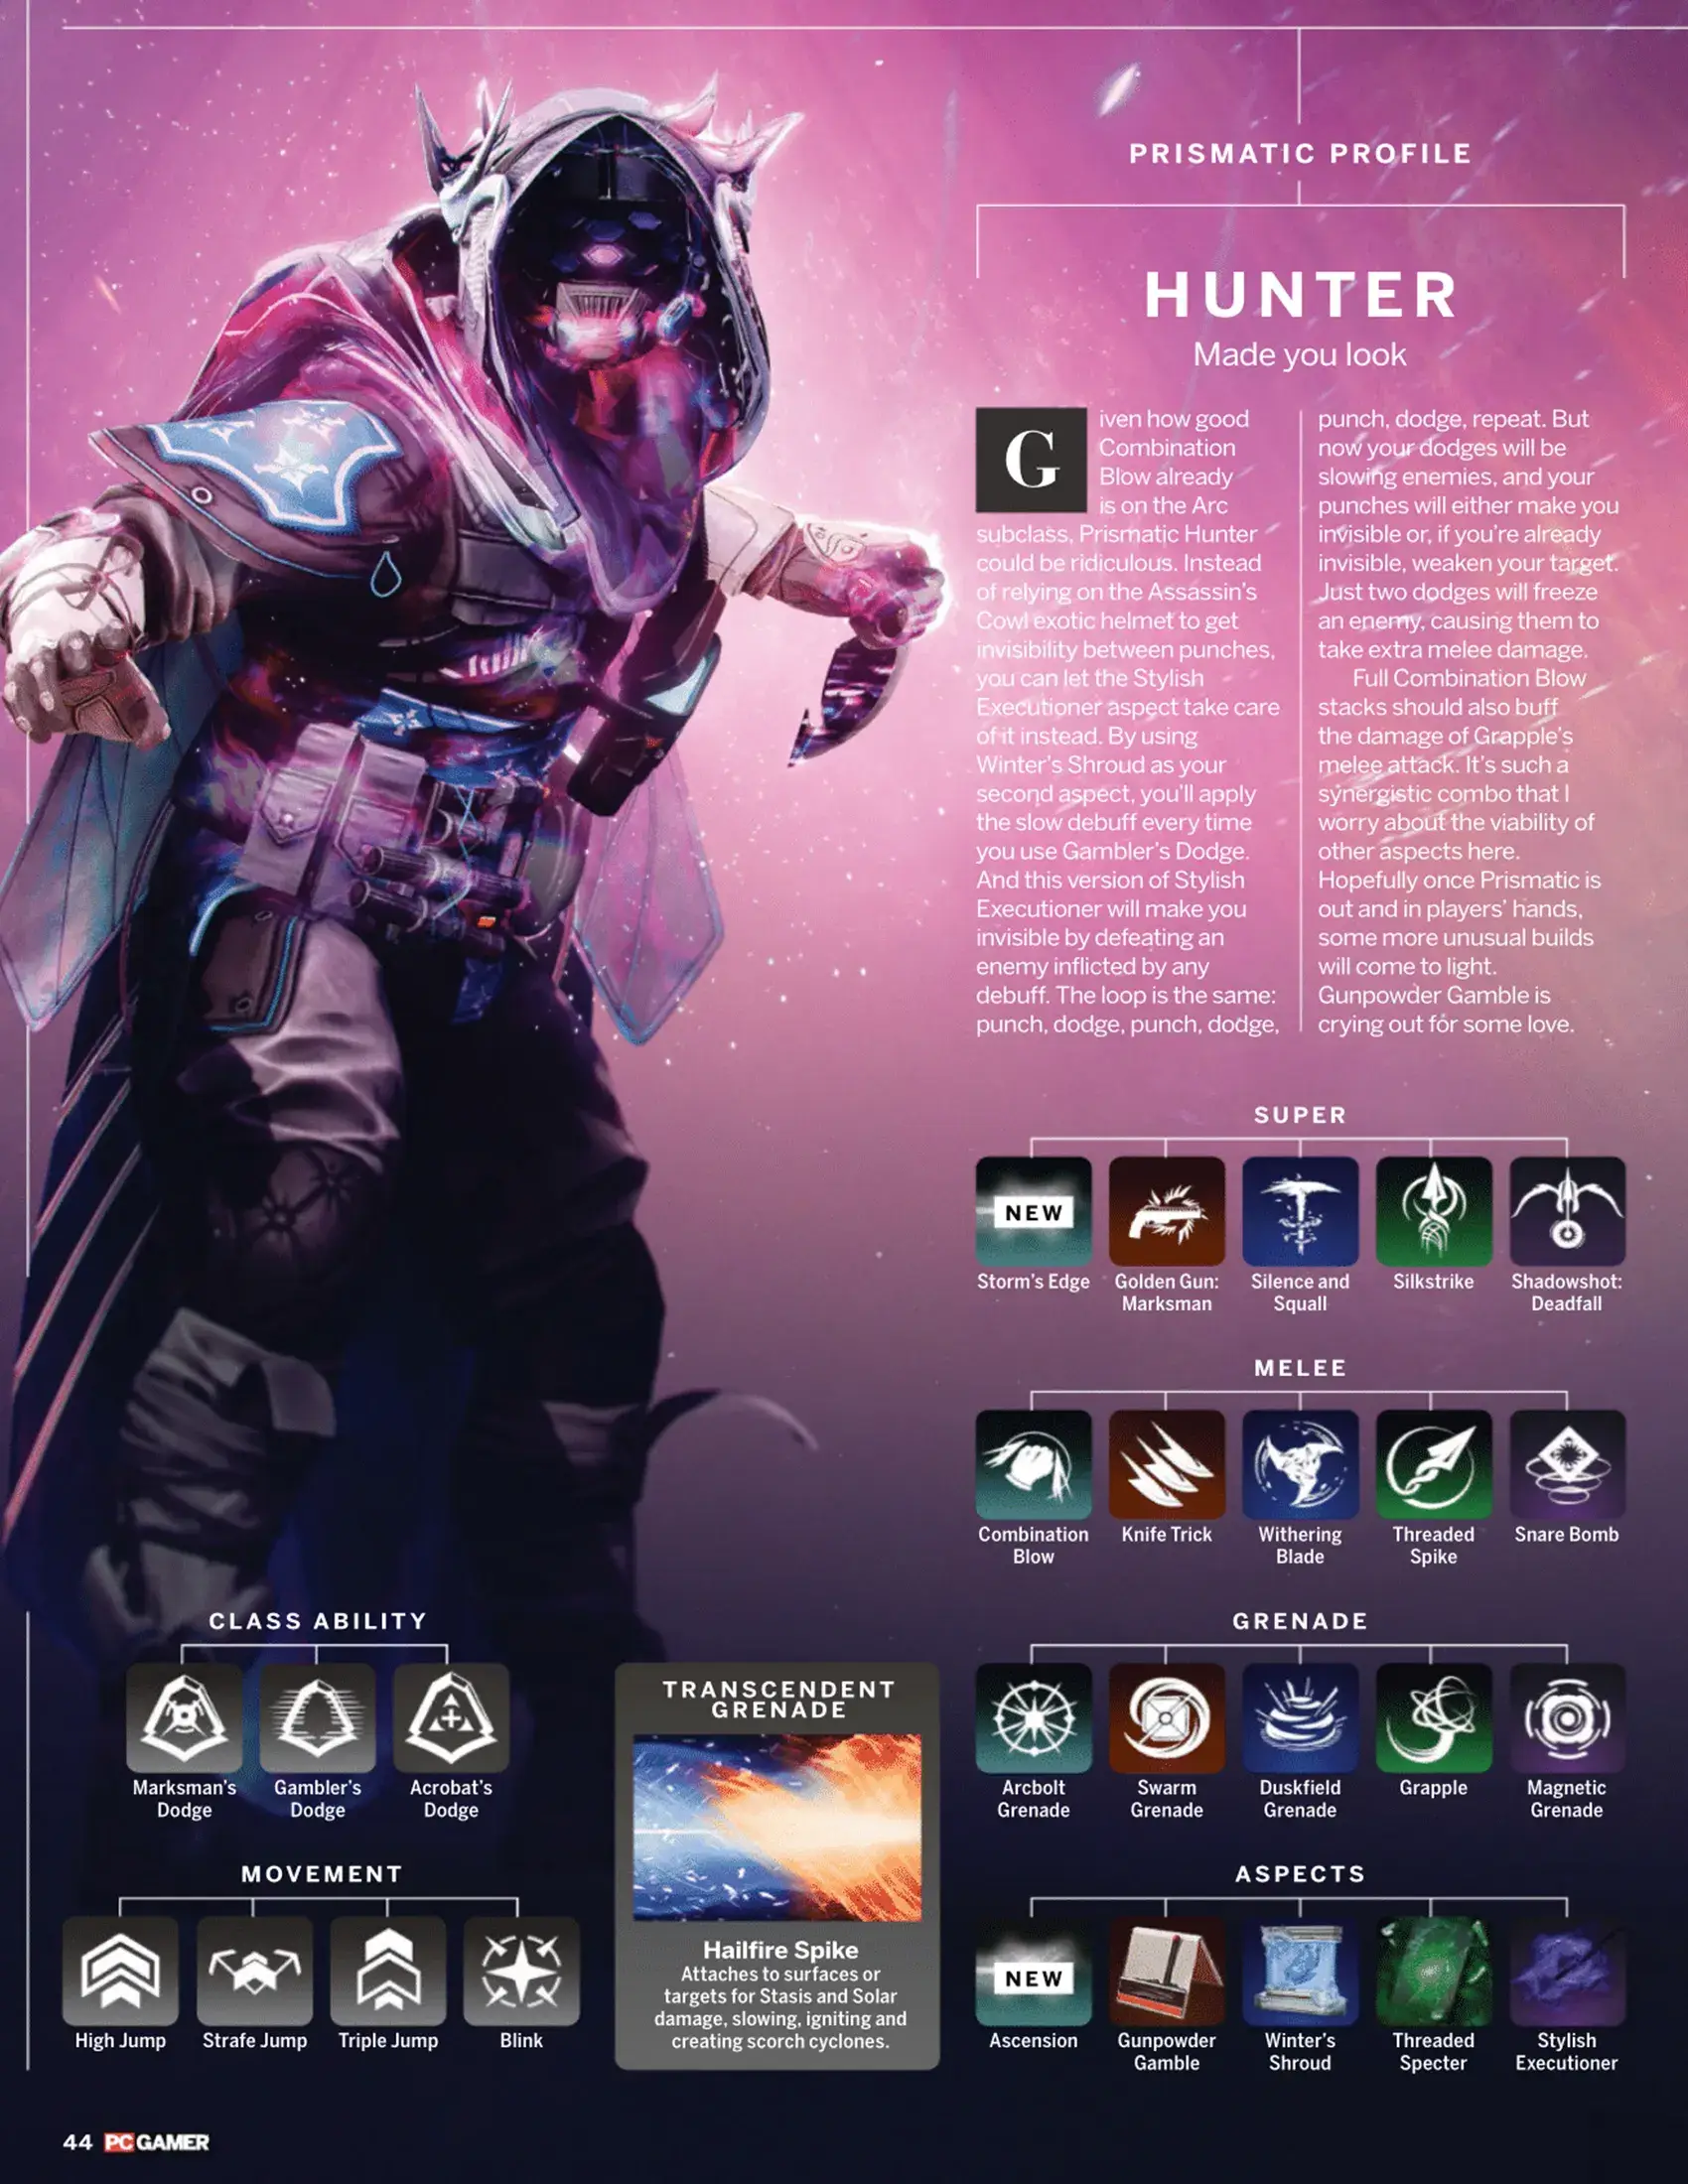 Destiny 2 Hunter Prismatic Subclass Overview Graphic The Final Shape